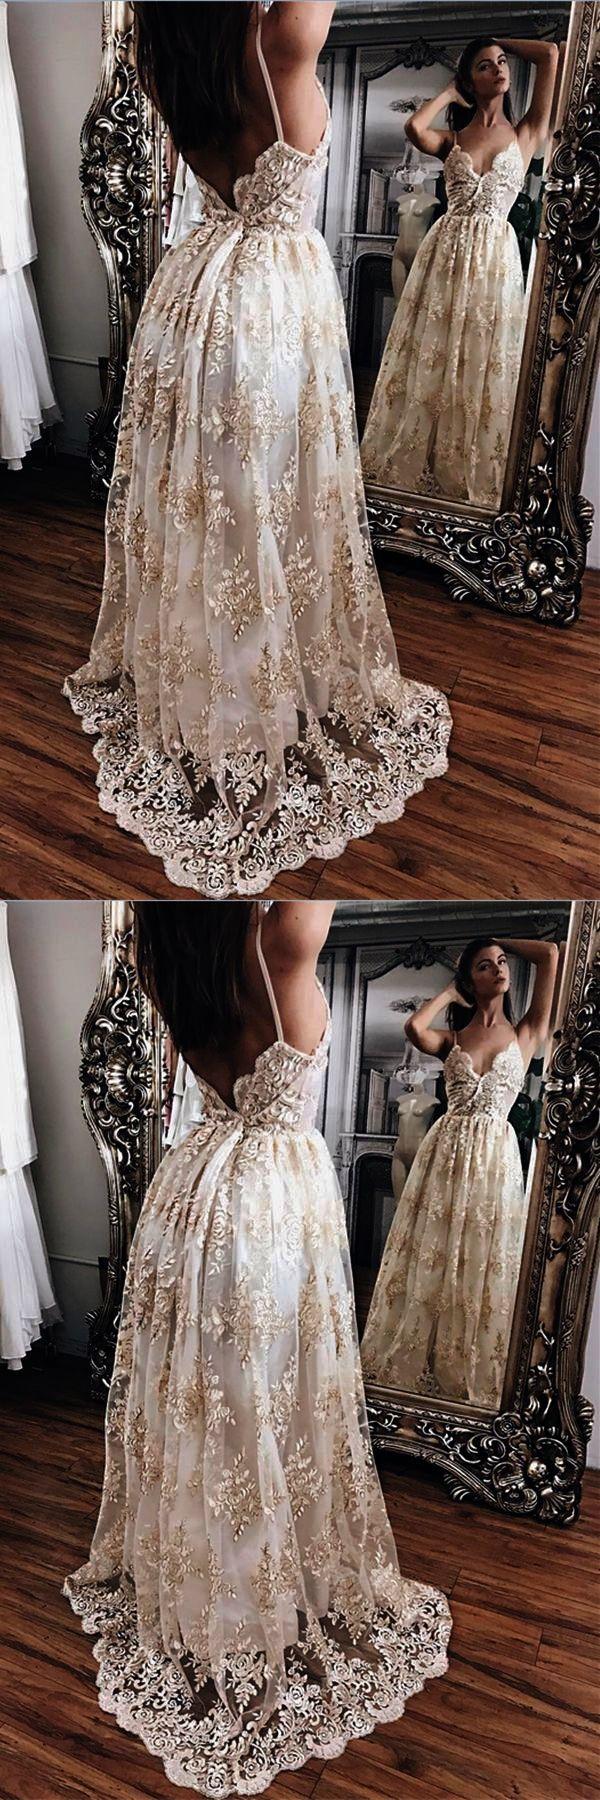 Wedding - Trendy - Most Beautiful Lace Wedding Dresses :-) 